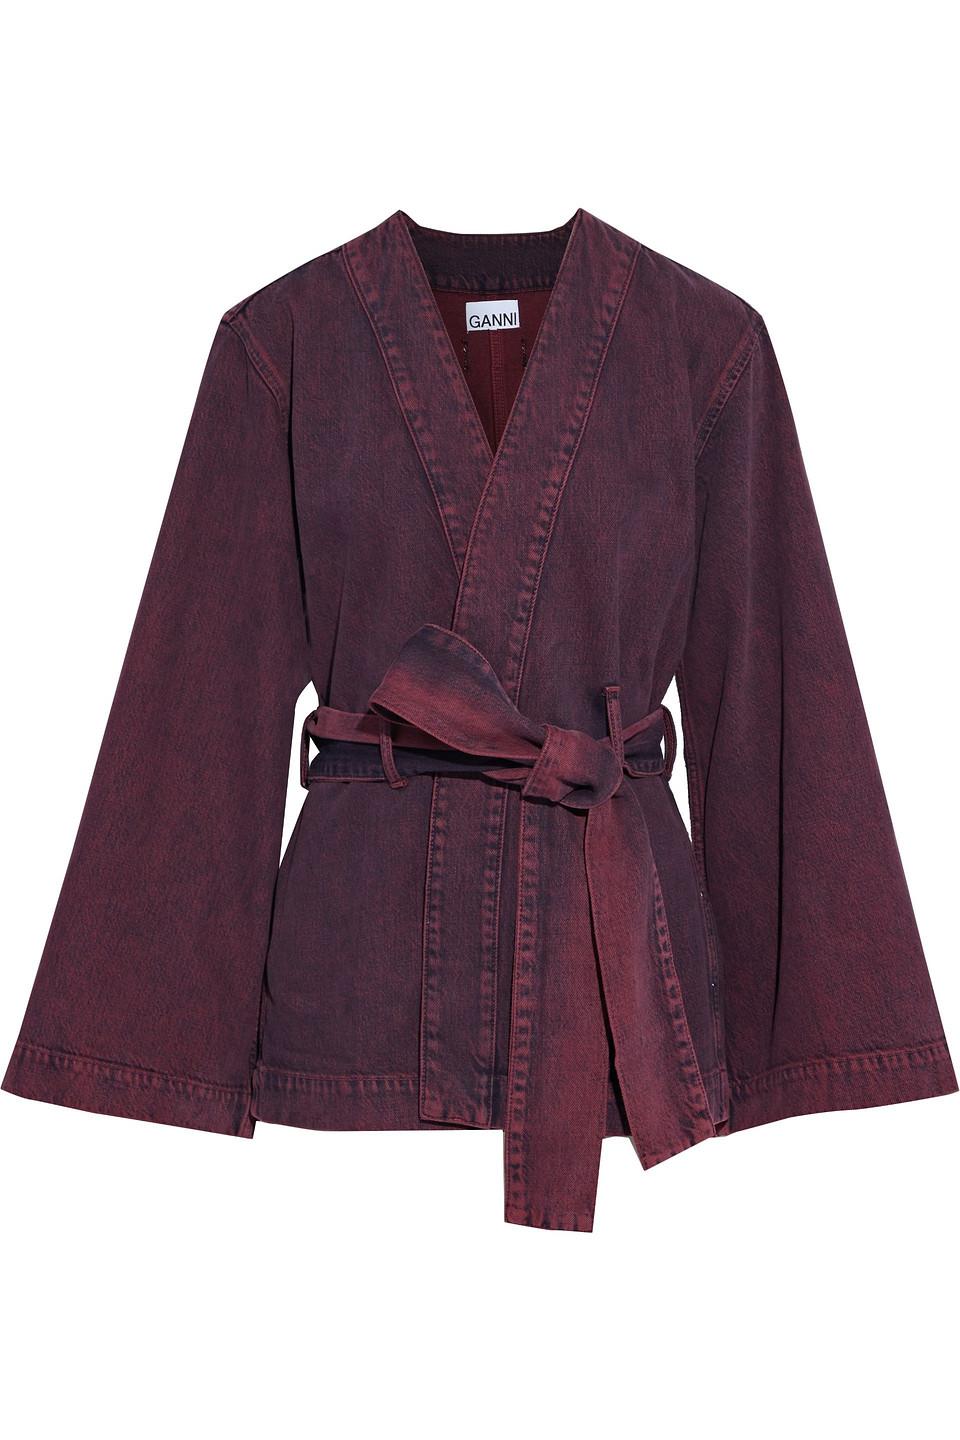 Ganni Belted Acid-wash Denim Kimono, Plain Pattern in Plum (Purple) - Lyst